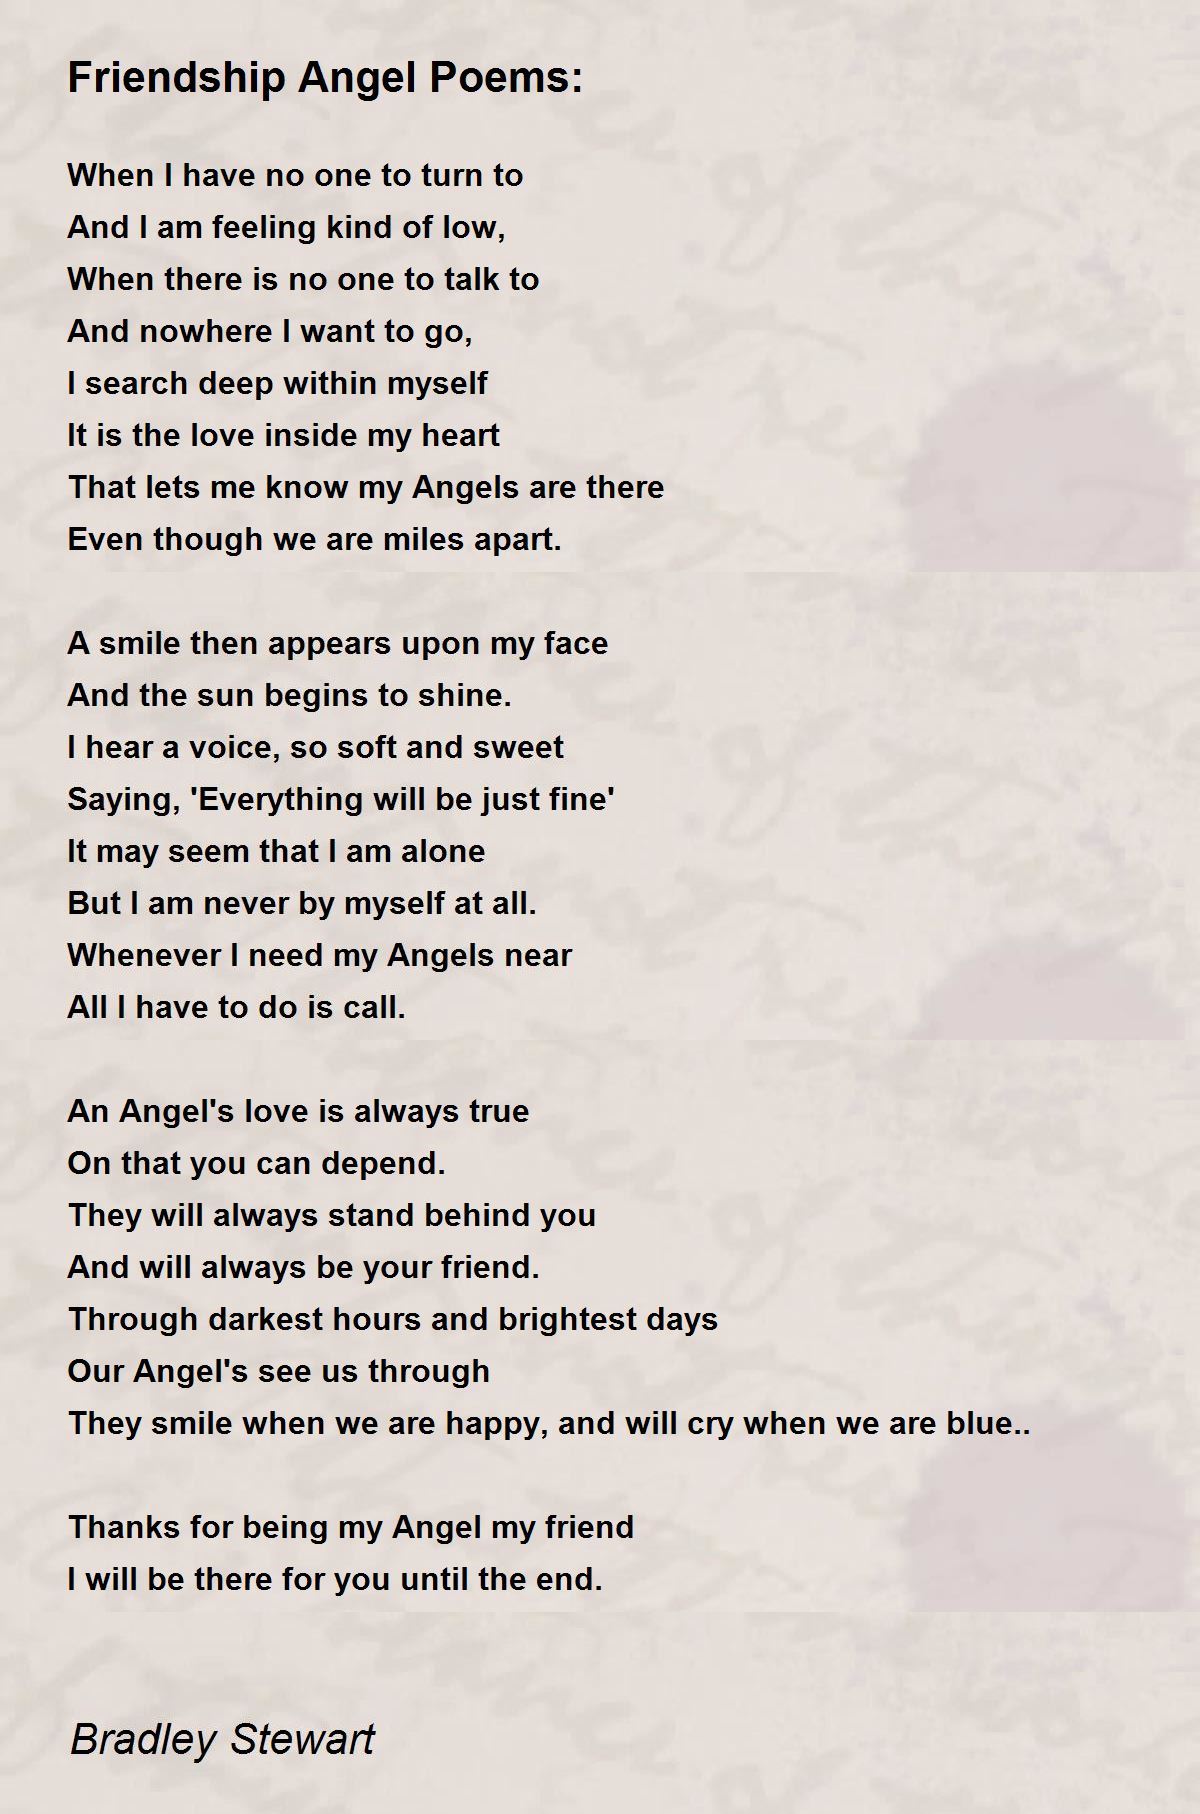 Friendship Angel Poems: Poem by Bradley Stewart - Poem Hunter